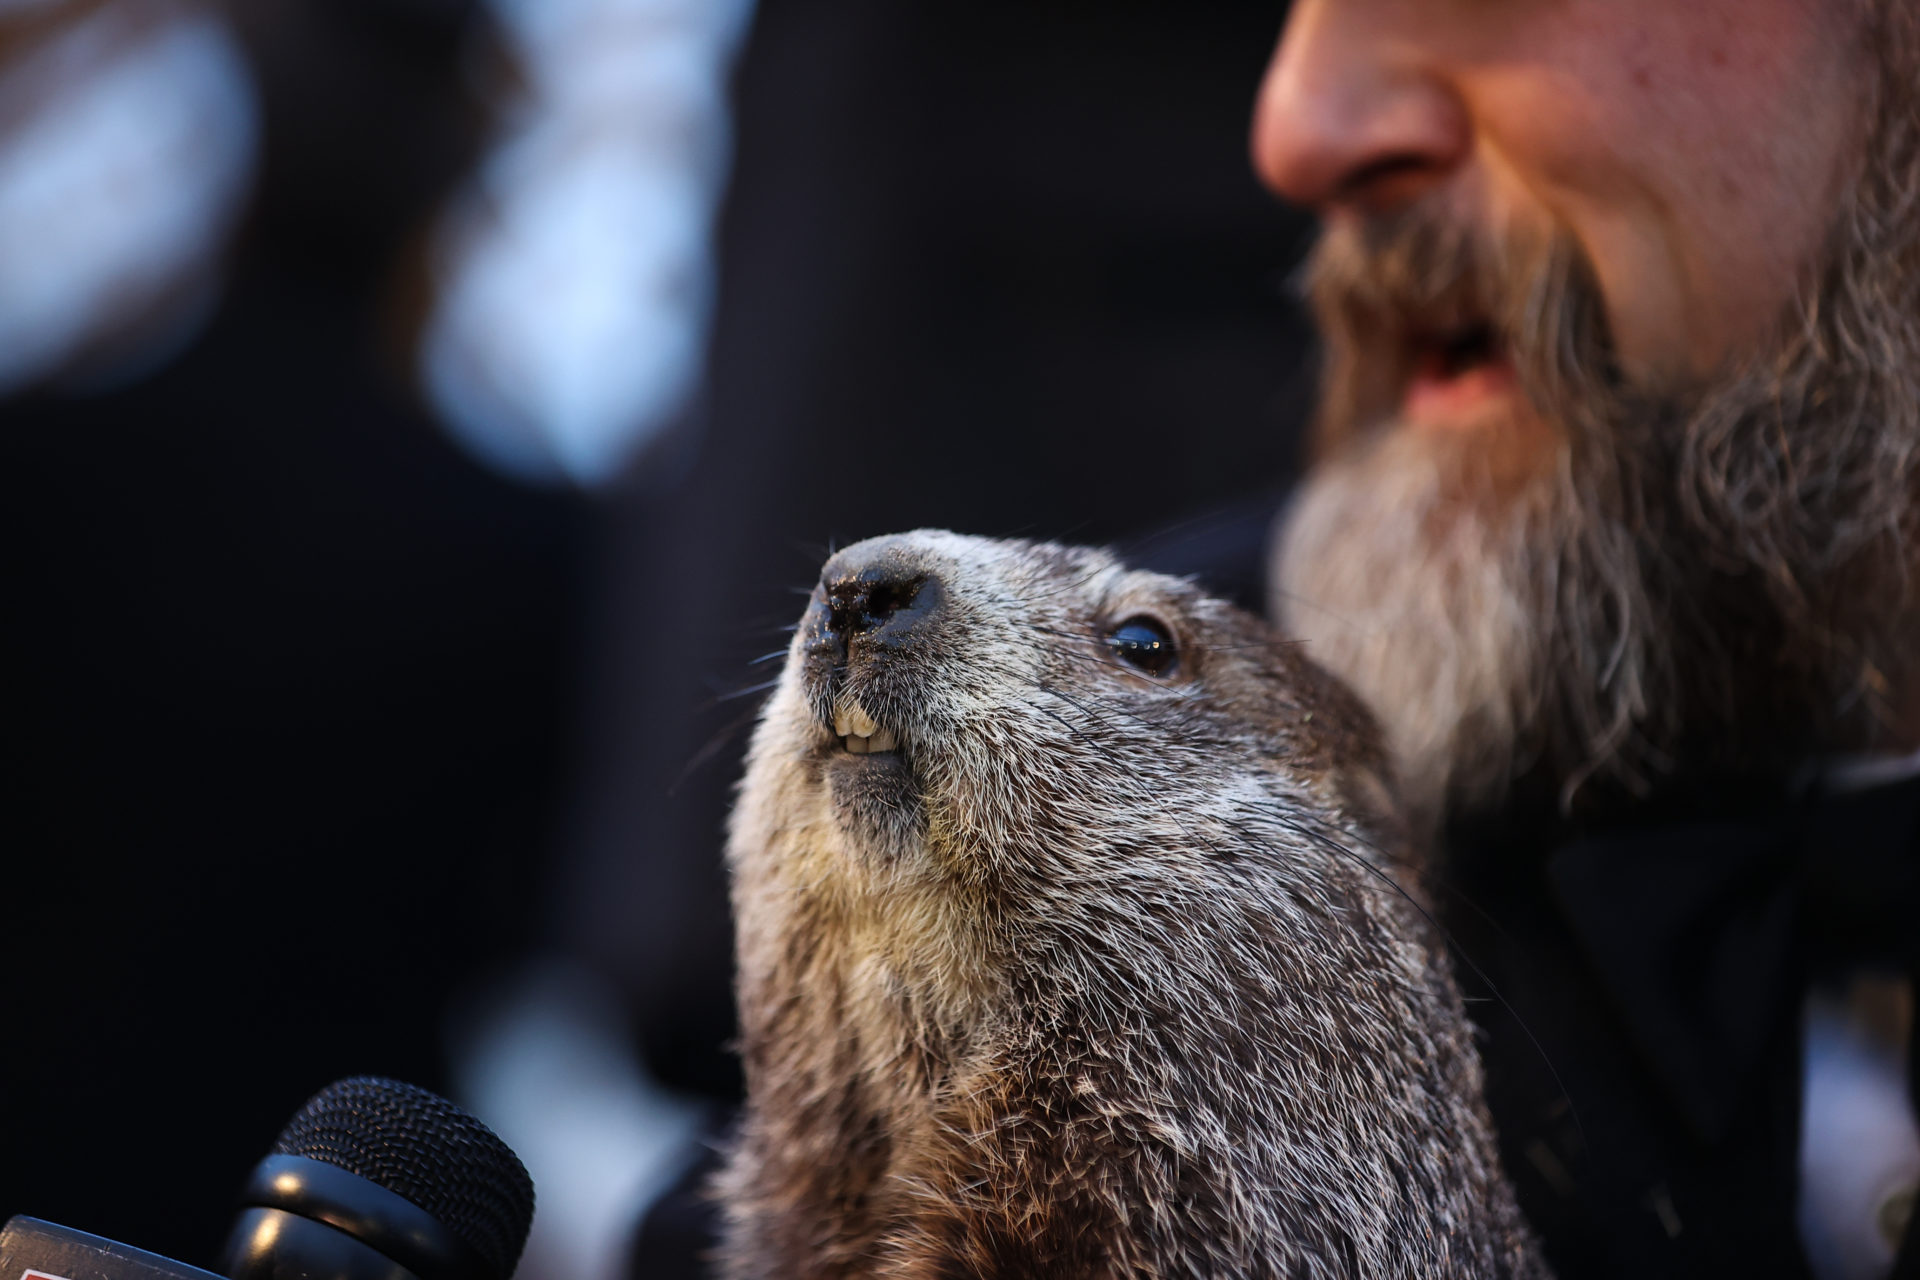 Groundhog Day 2022: Punxsutawney Phil says 6 more weeks winter